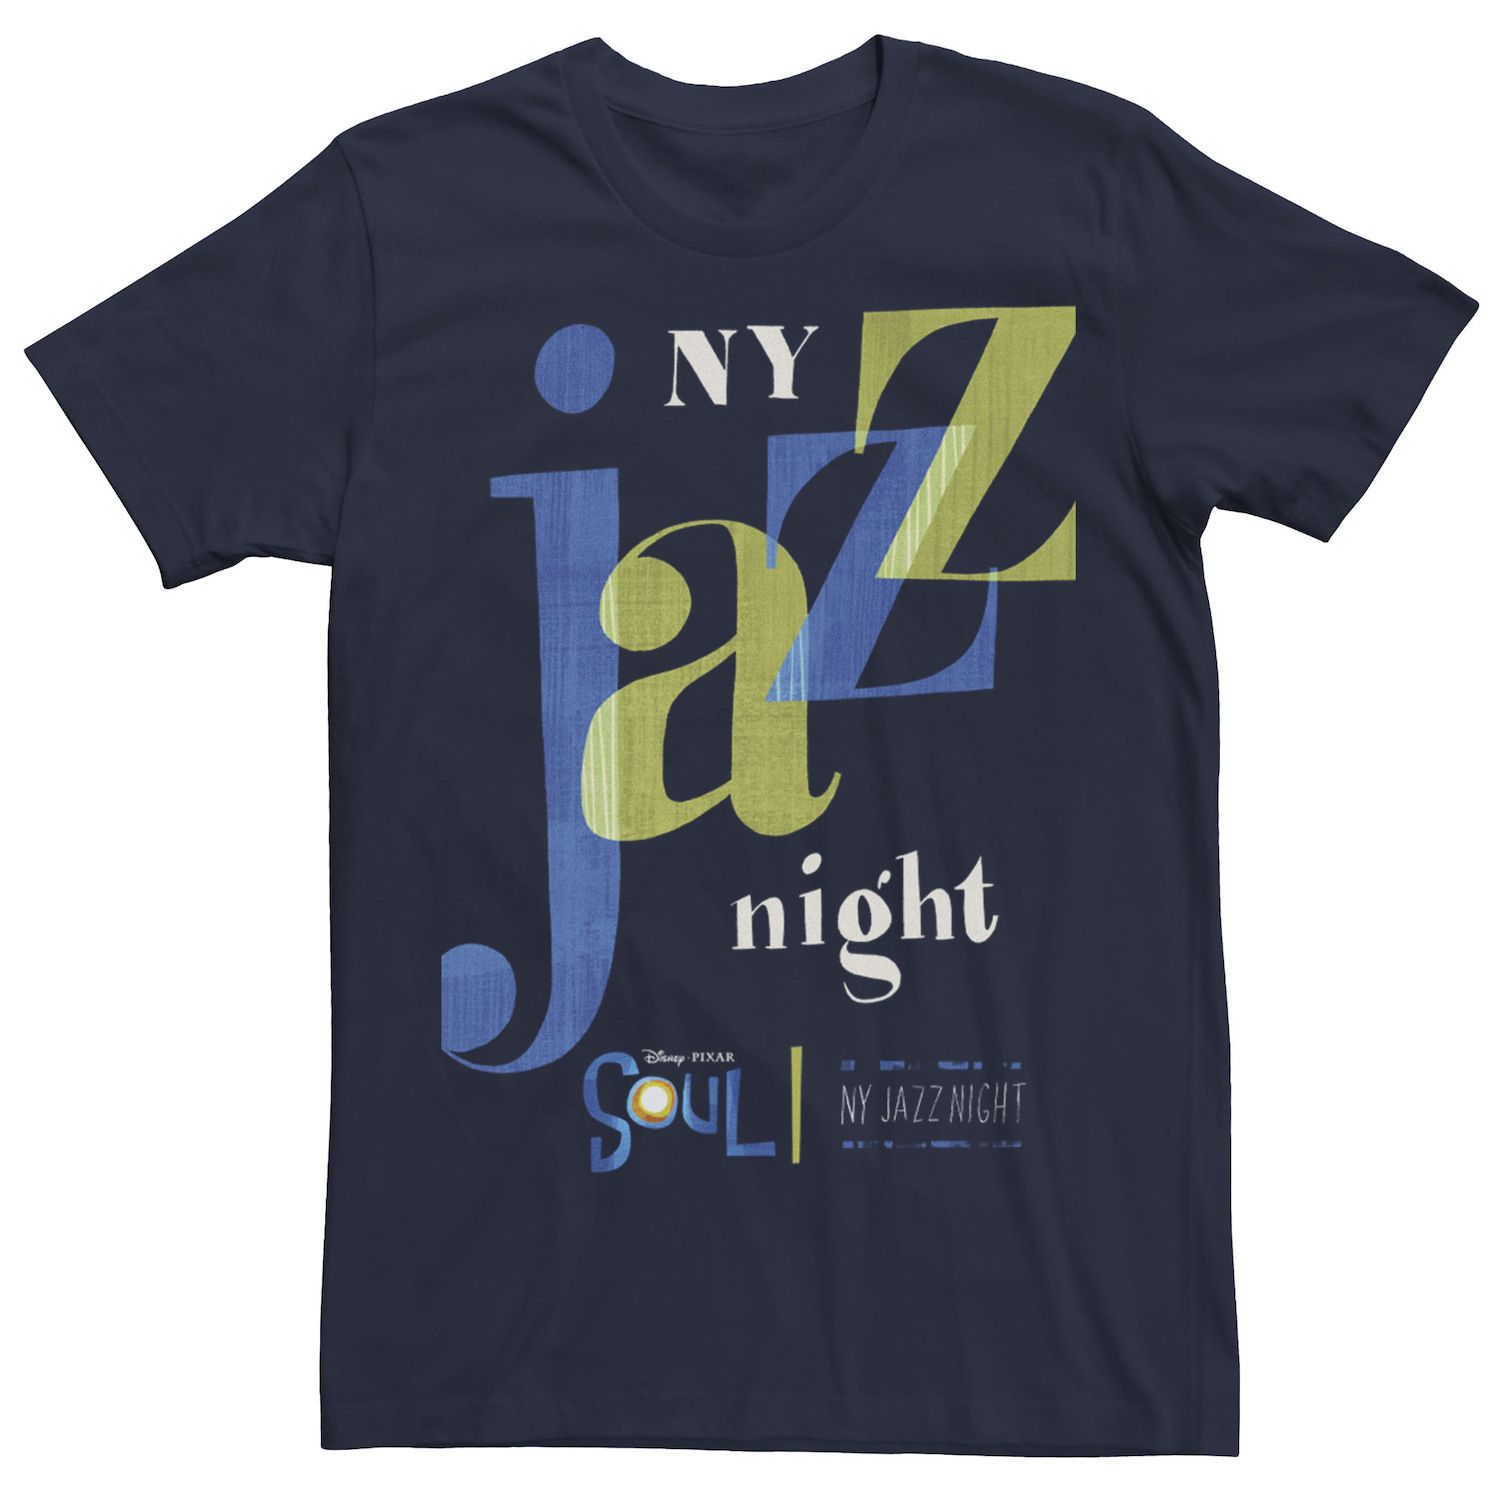 Image for Disney / Pixar Men's Soul NY Jazz Night Logo Tee at Kohl's.